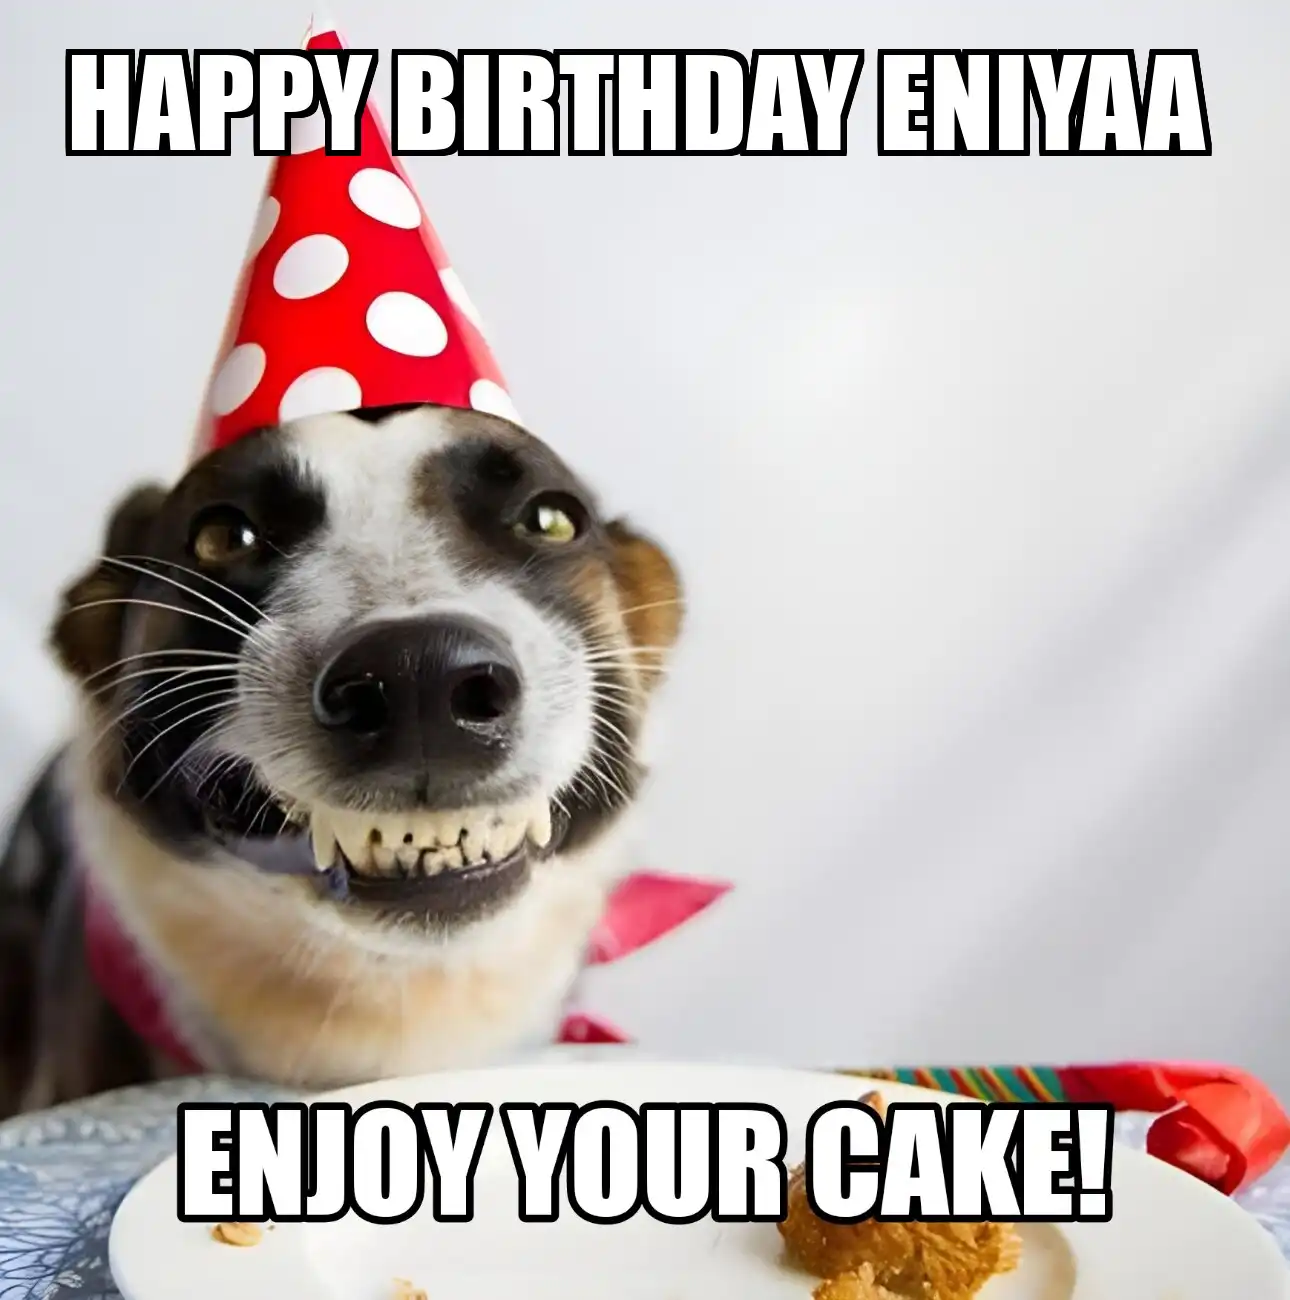 Happy Birthday Eniyaa Enjoy Your Cake Dog Meme